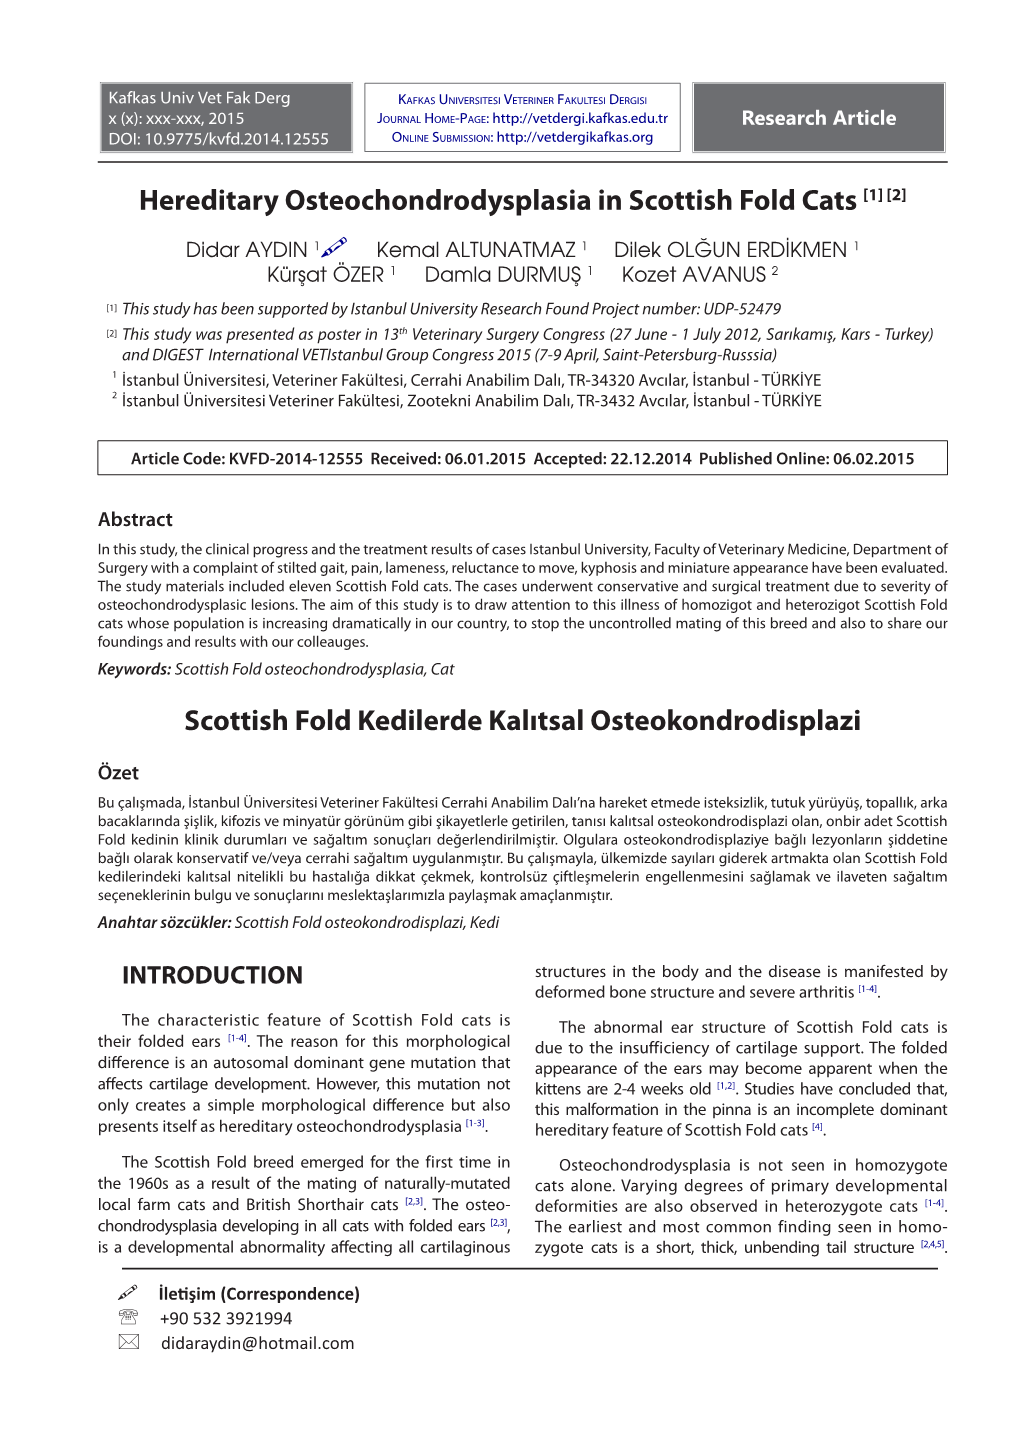 Hereditary Osteochondrodysplasia in Scottish Fold Cats [1] [2]